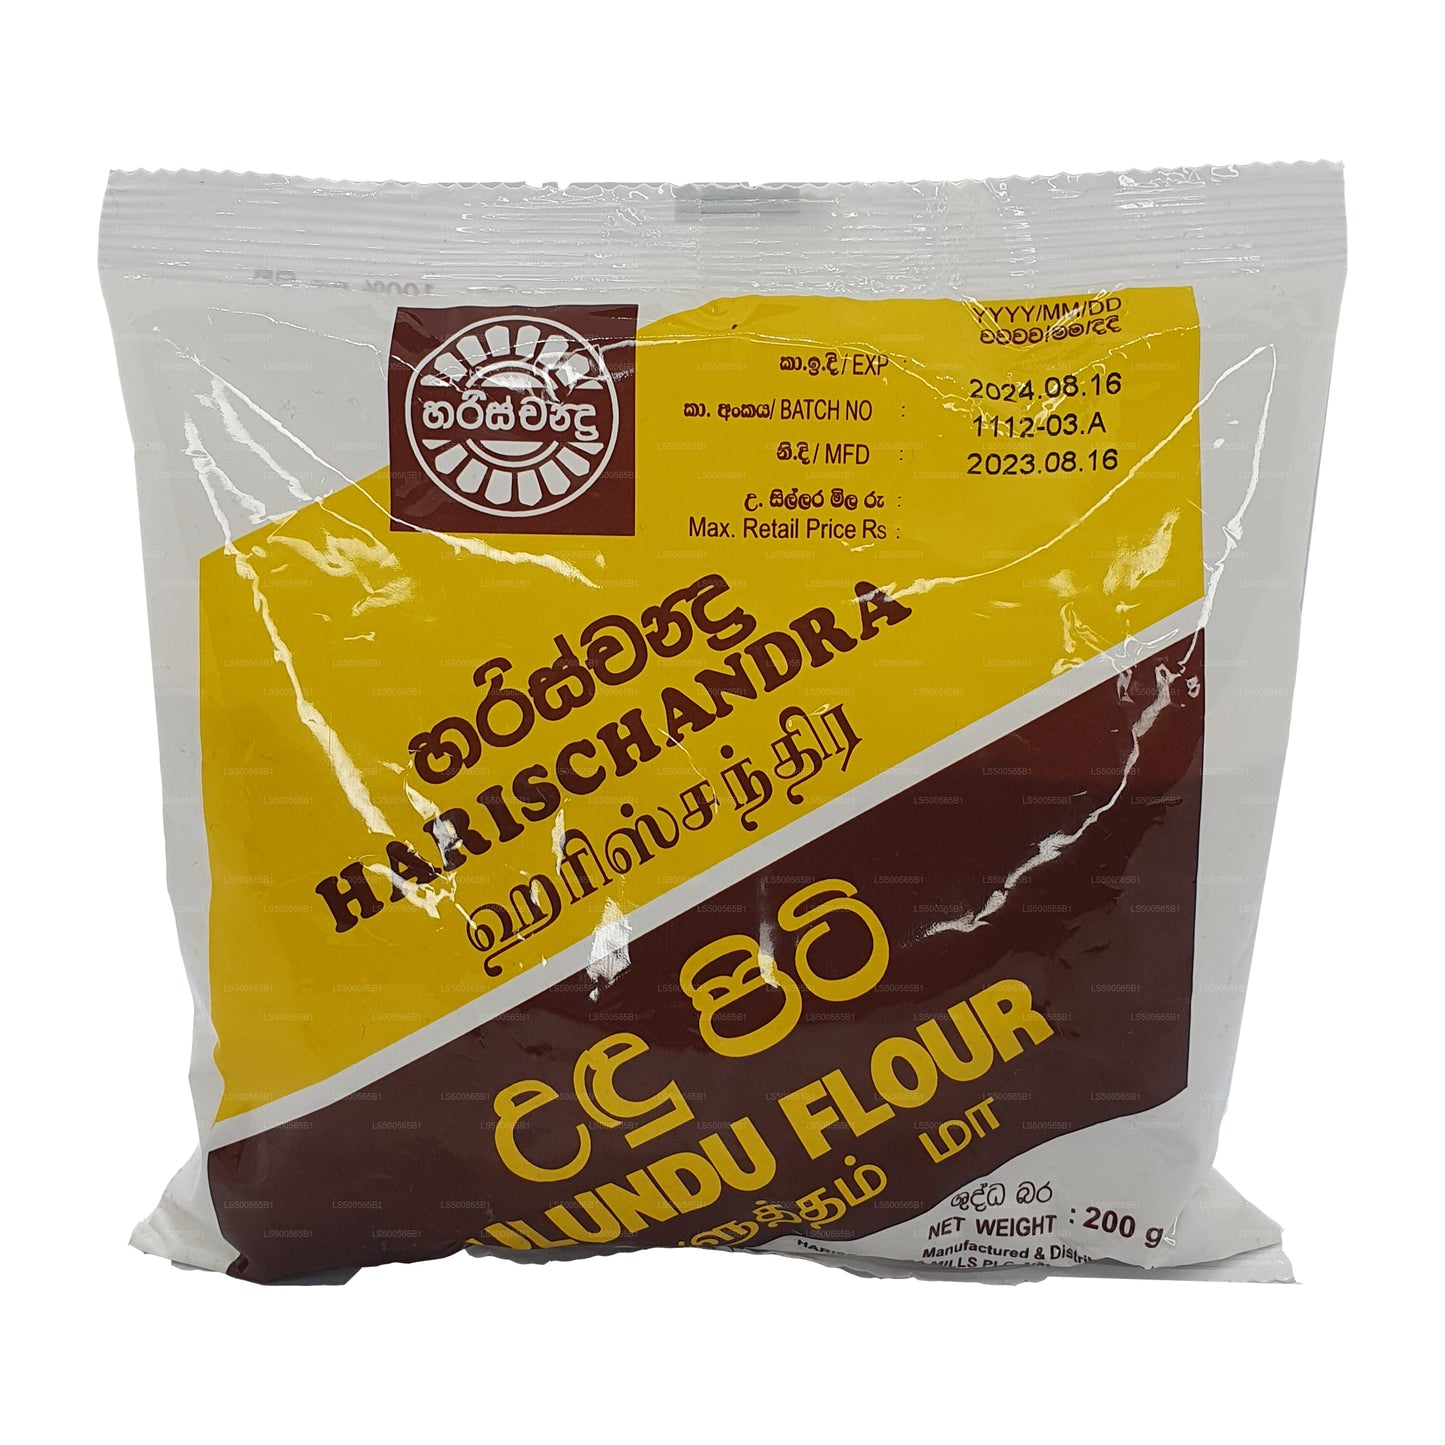 Harischandra Ulundu Flour (200g)